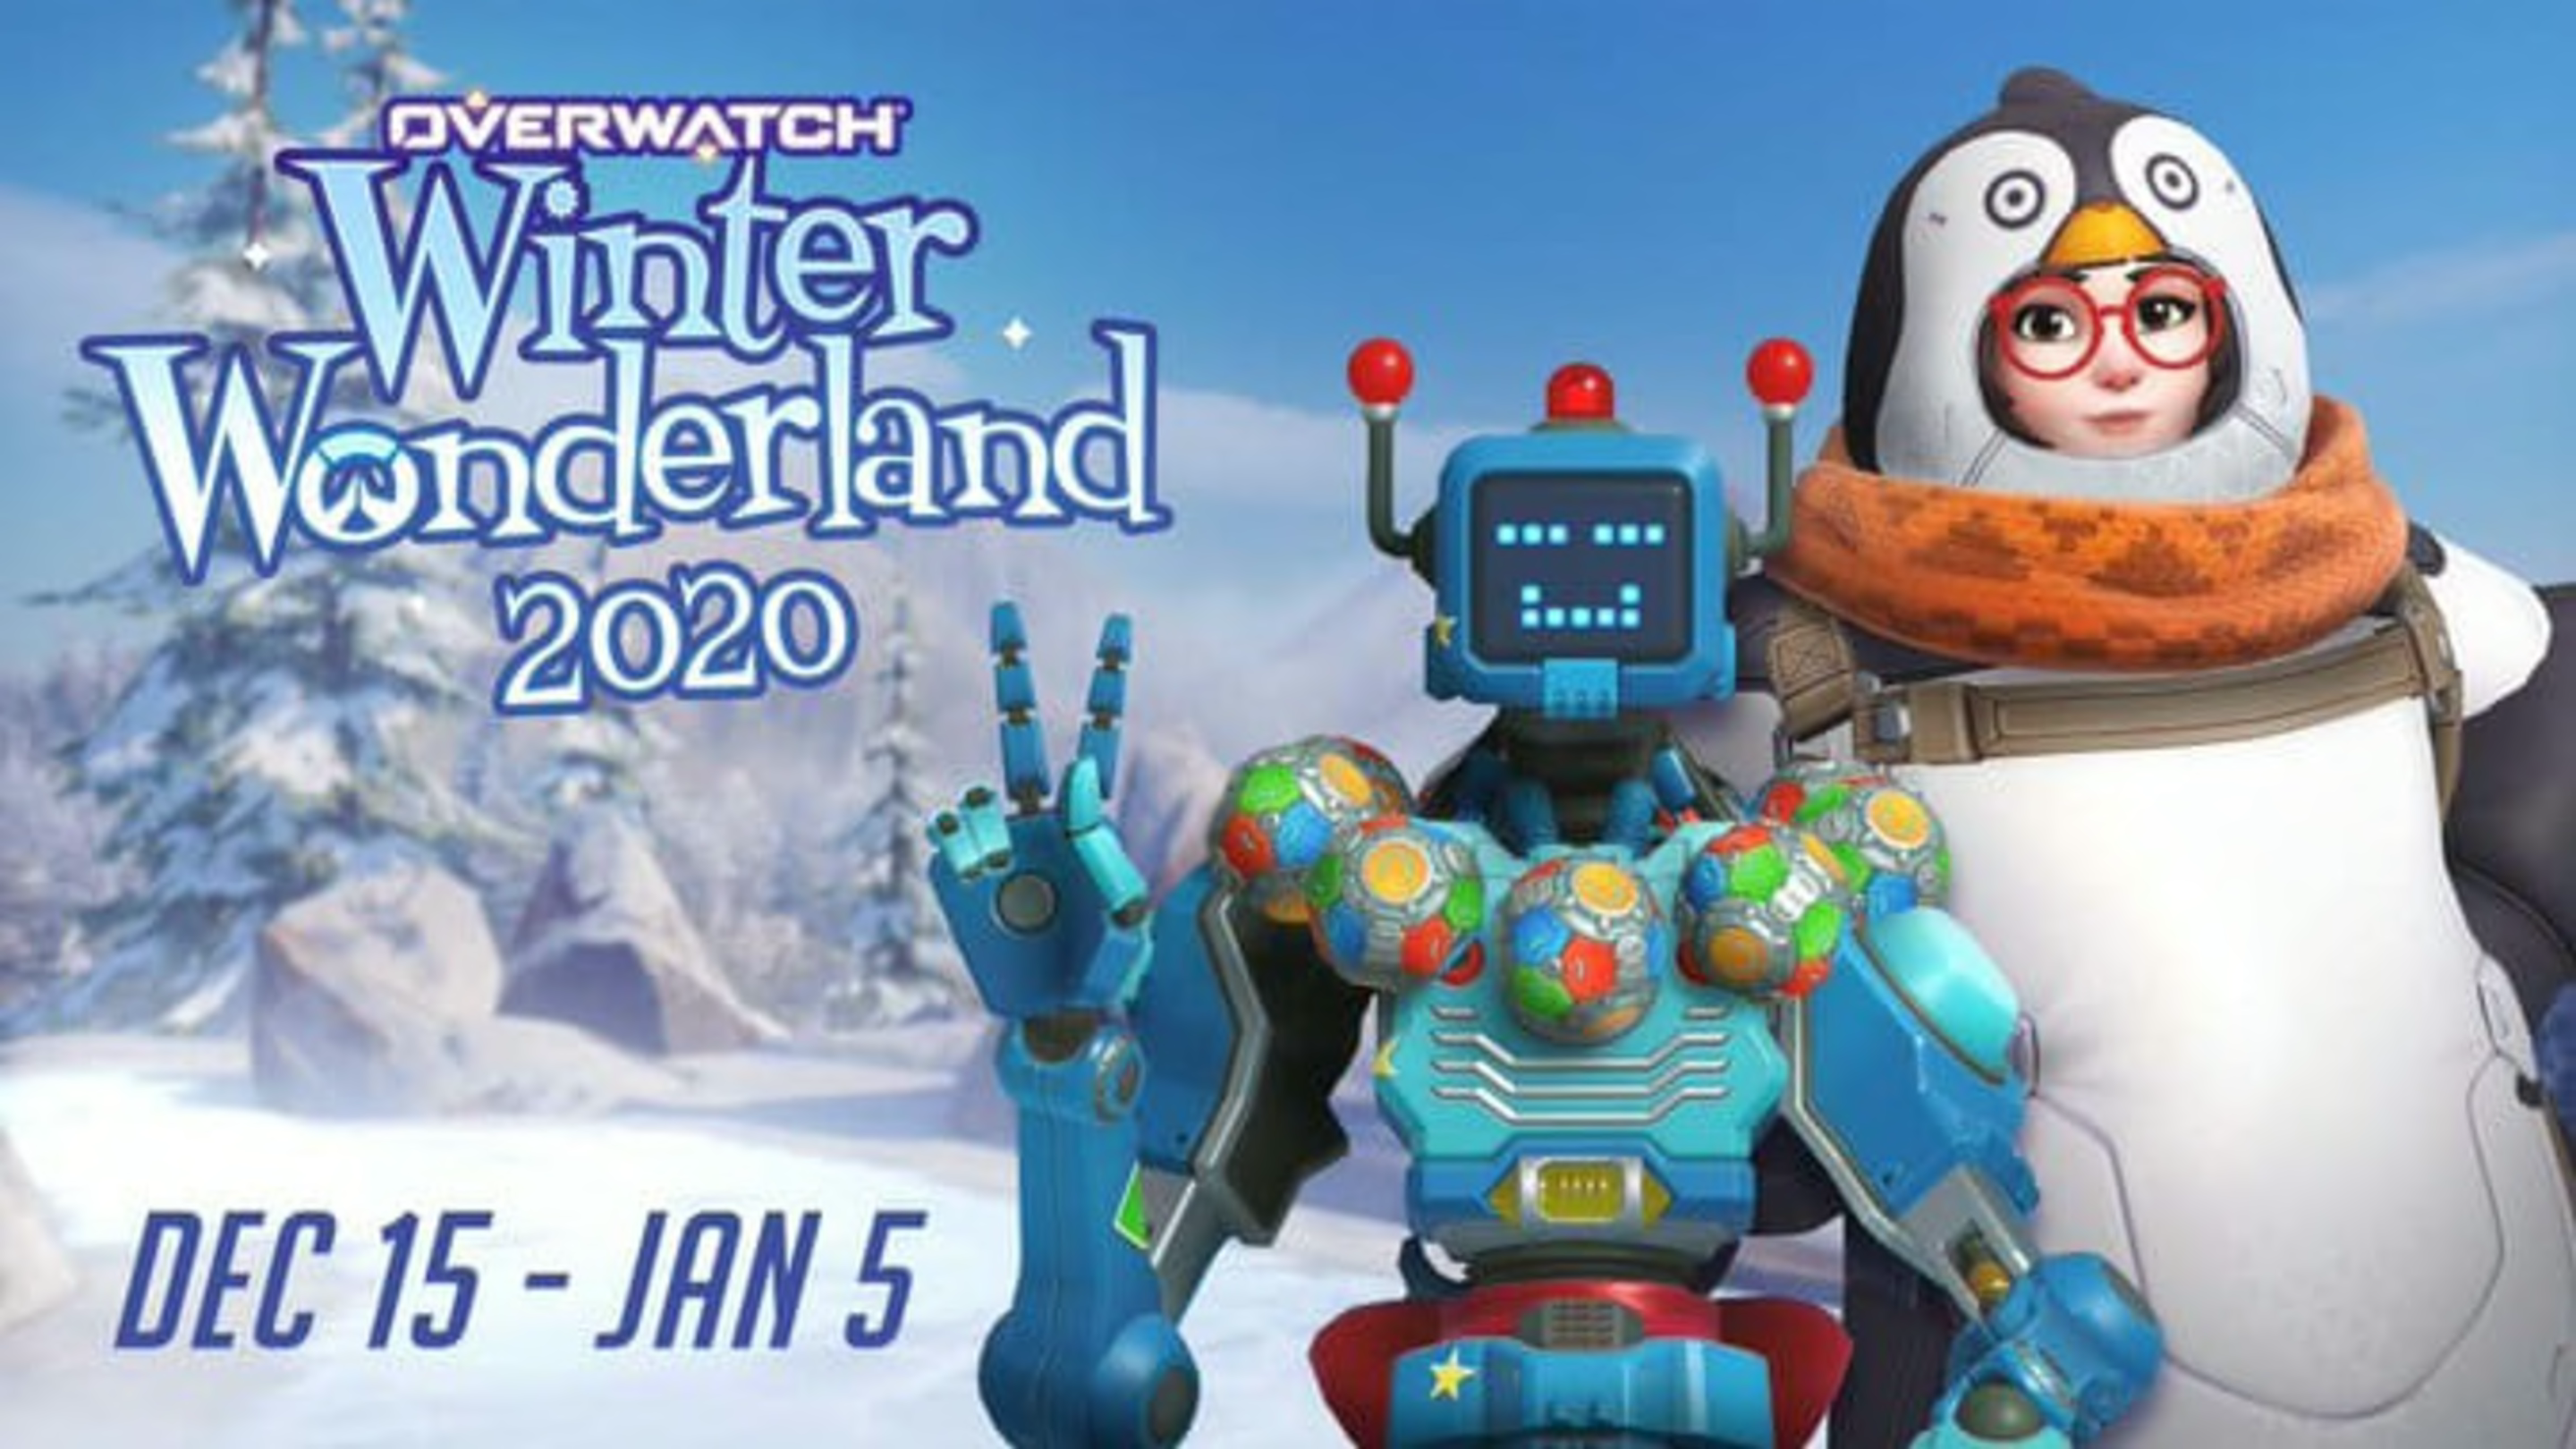 Overwatch Freezethaw Elimination Brawl Revealed for Winter Wonderland